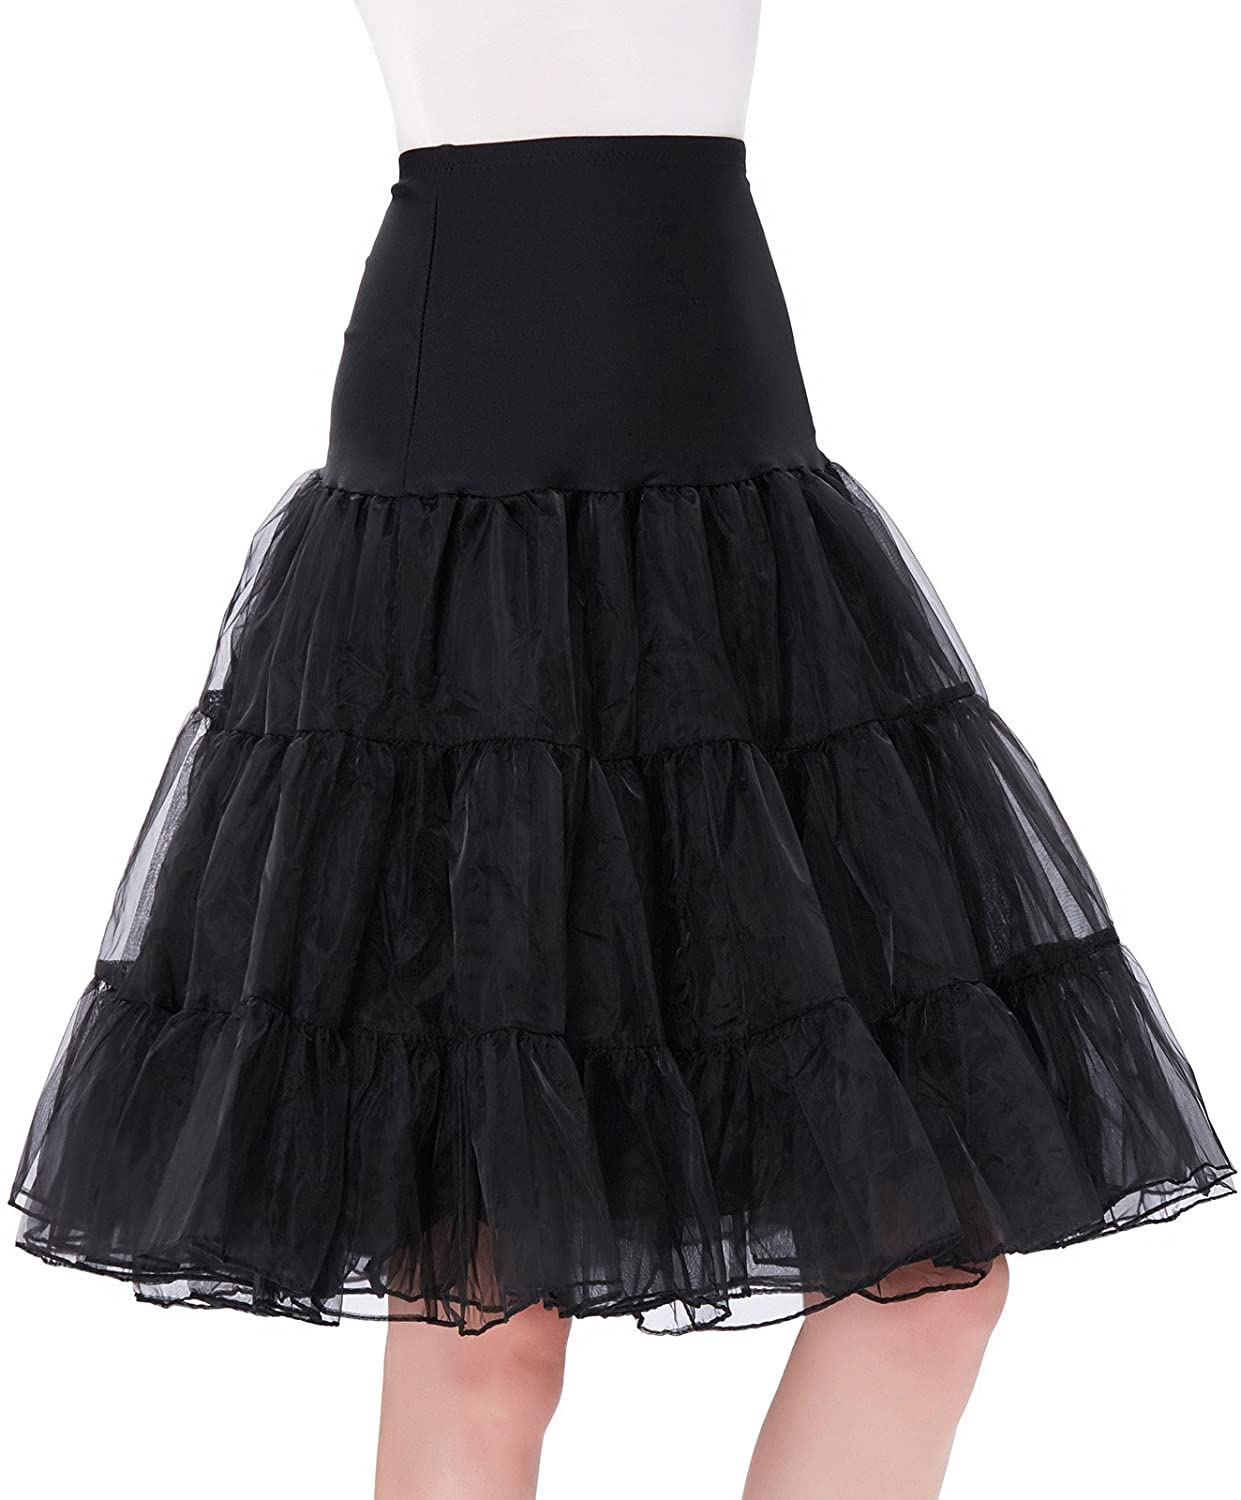 GRACE KARIN Women's 50s Petticoat Vintage Crinoline Underskirts